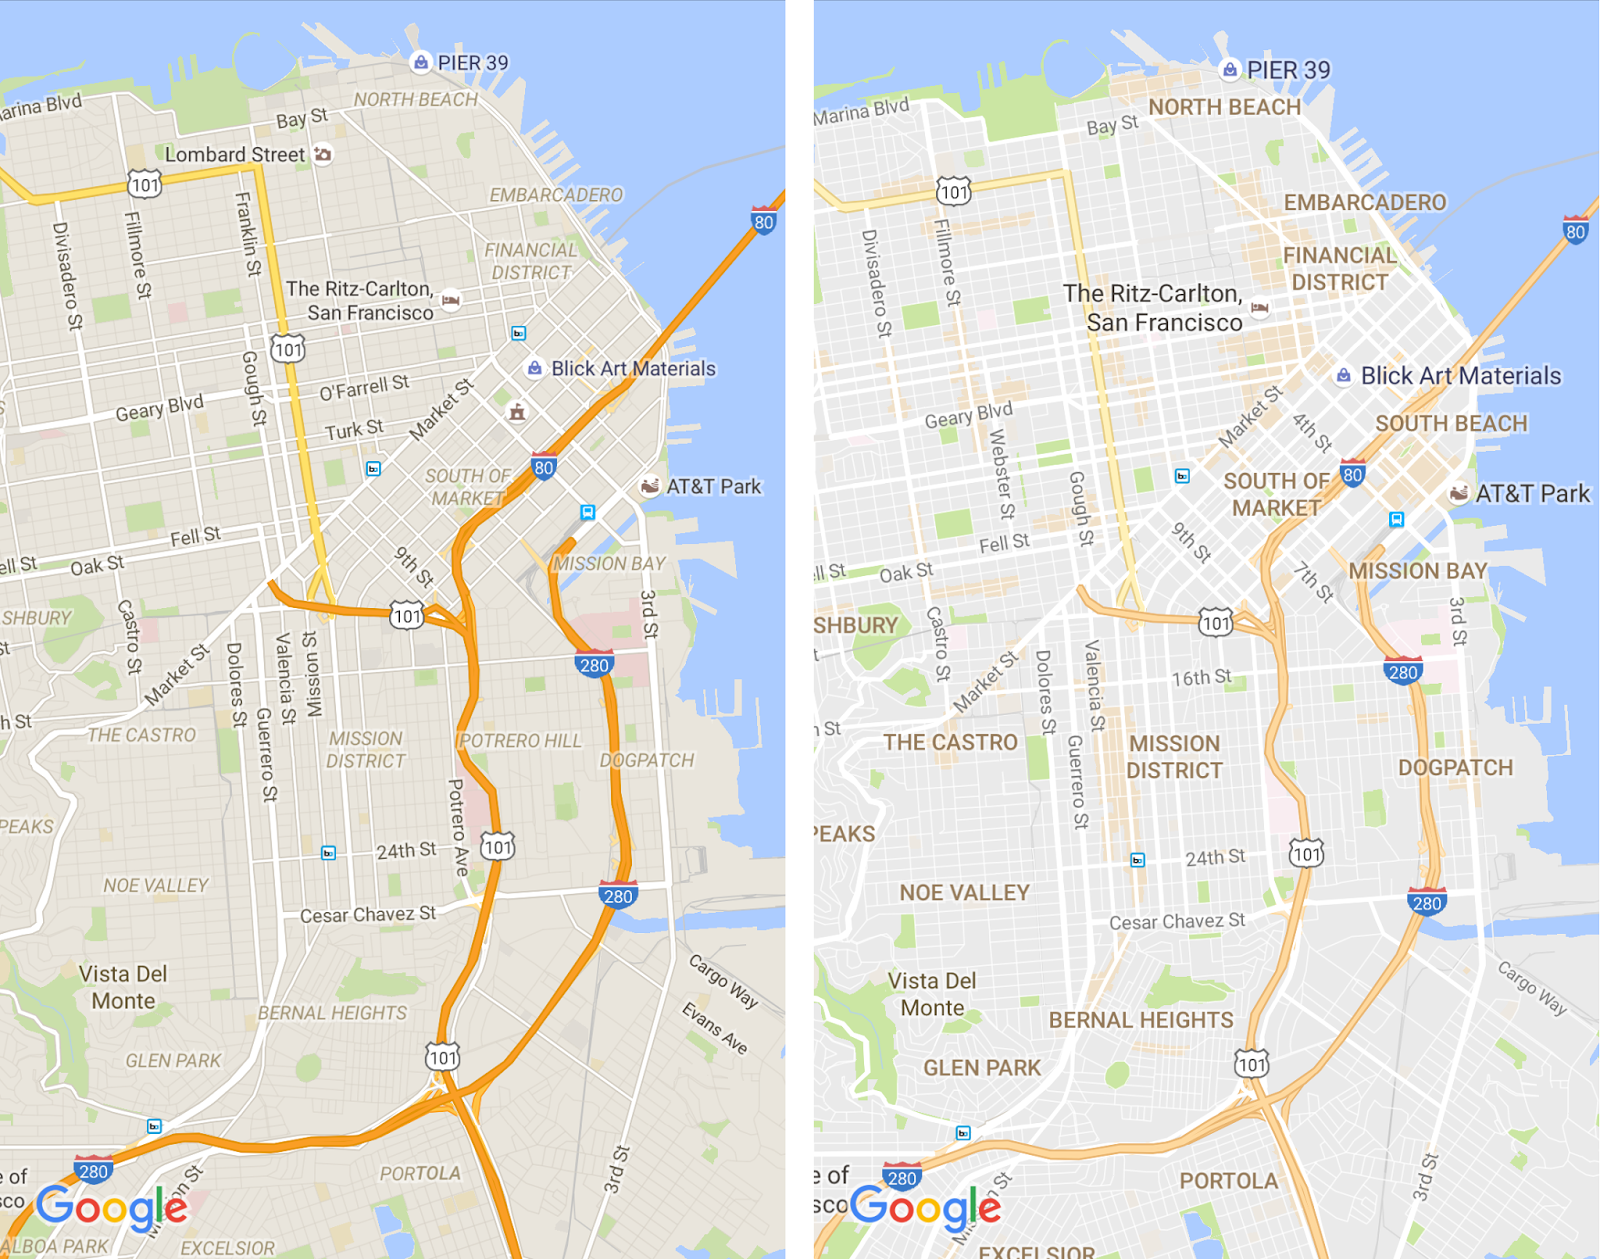 Google maps redesign